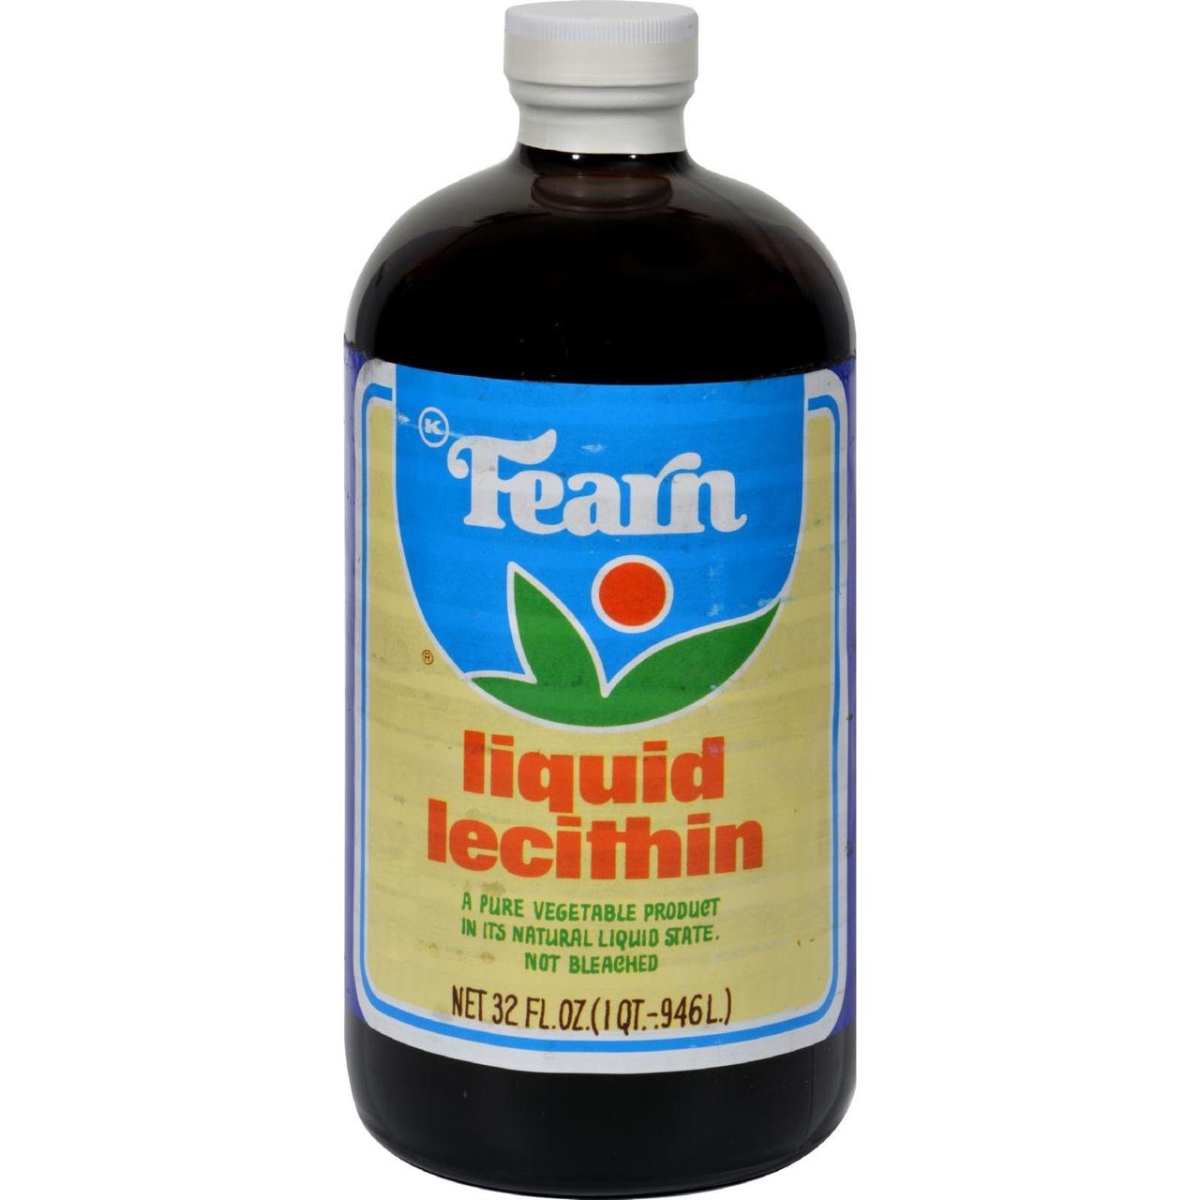 Hg0530048 32 Fl Oz Liquid Lecithin